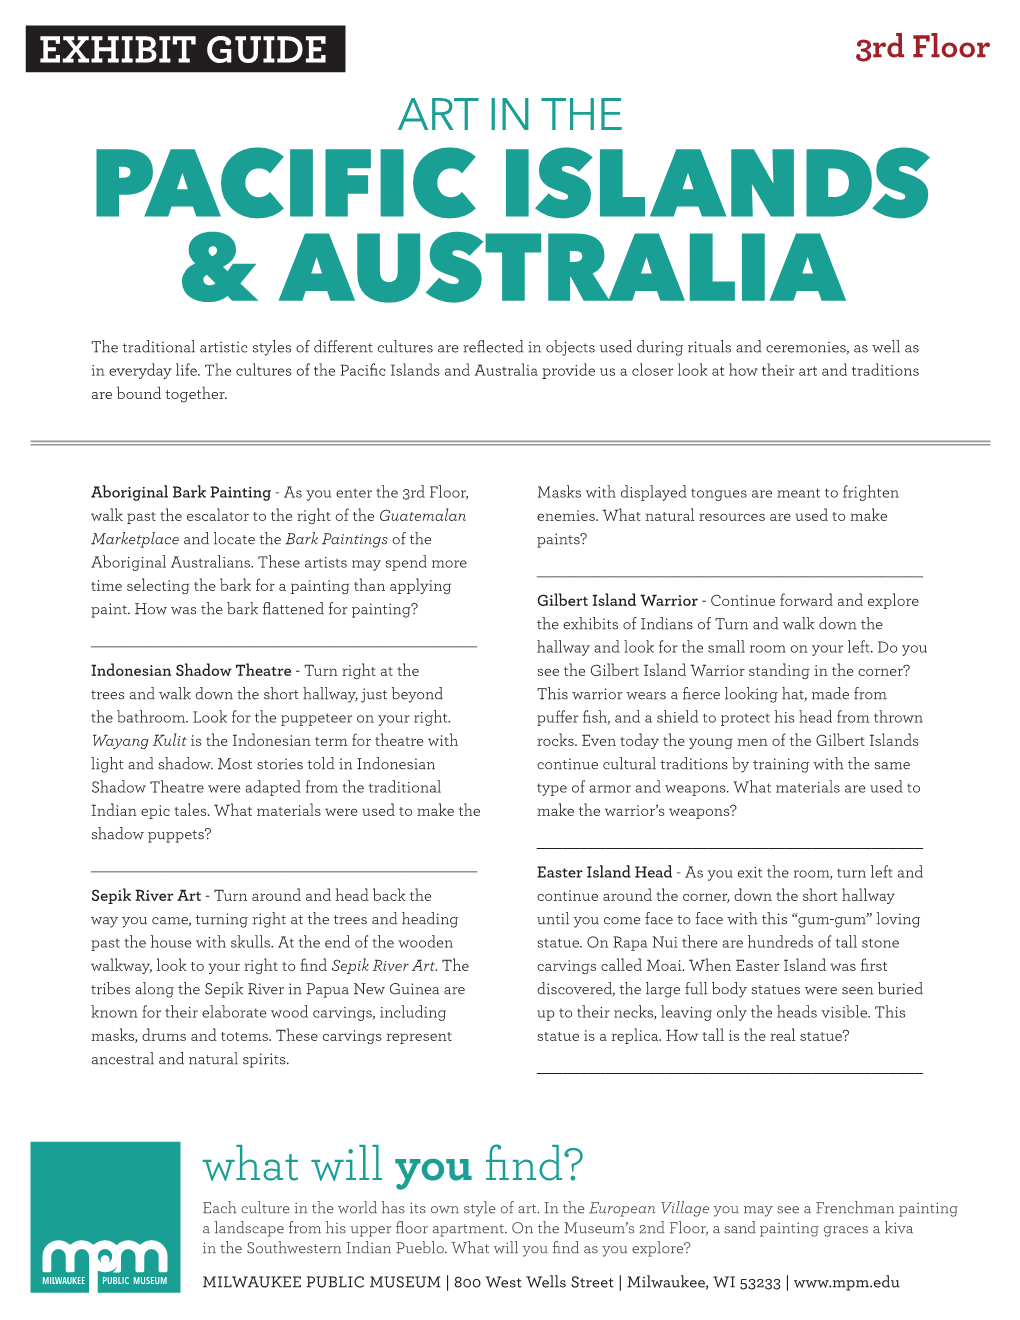 Pacific Islands & Australia